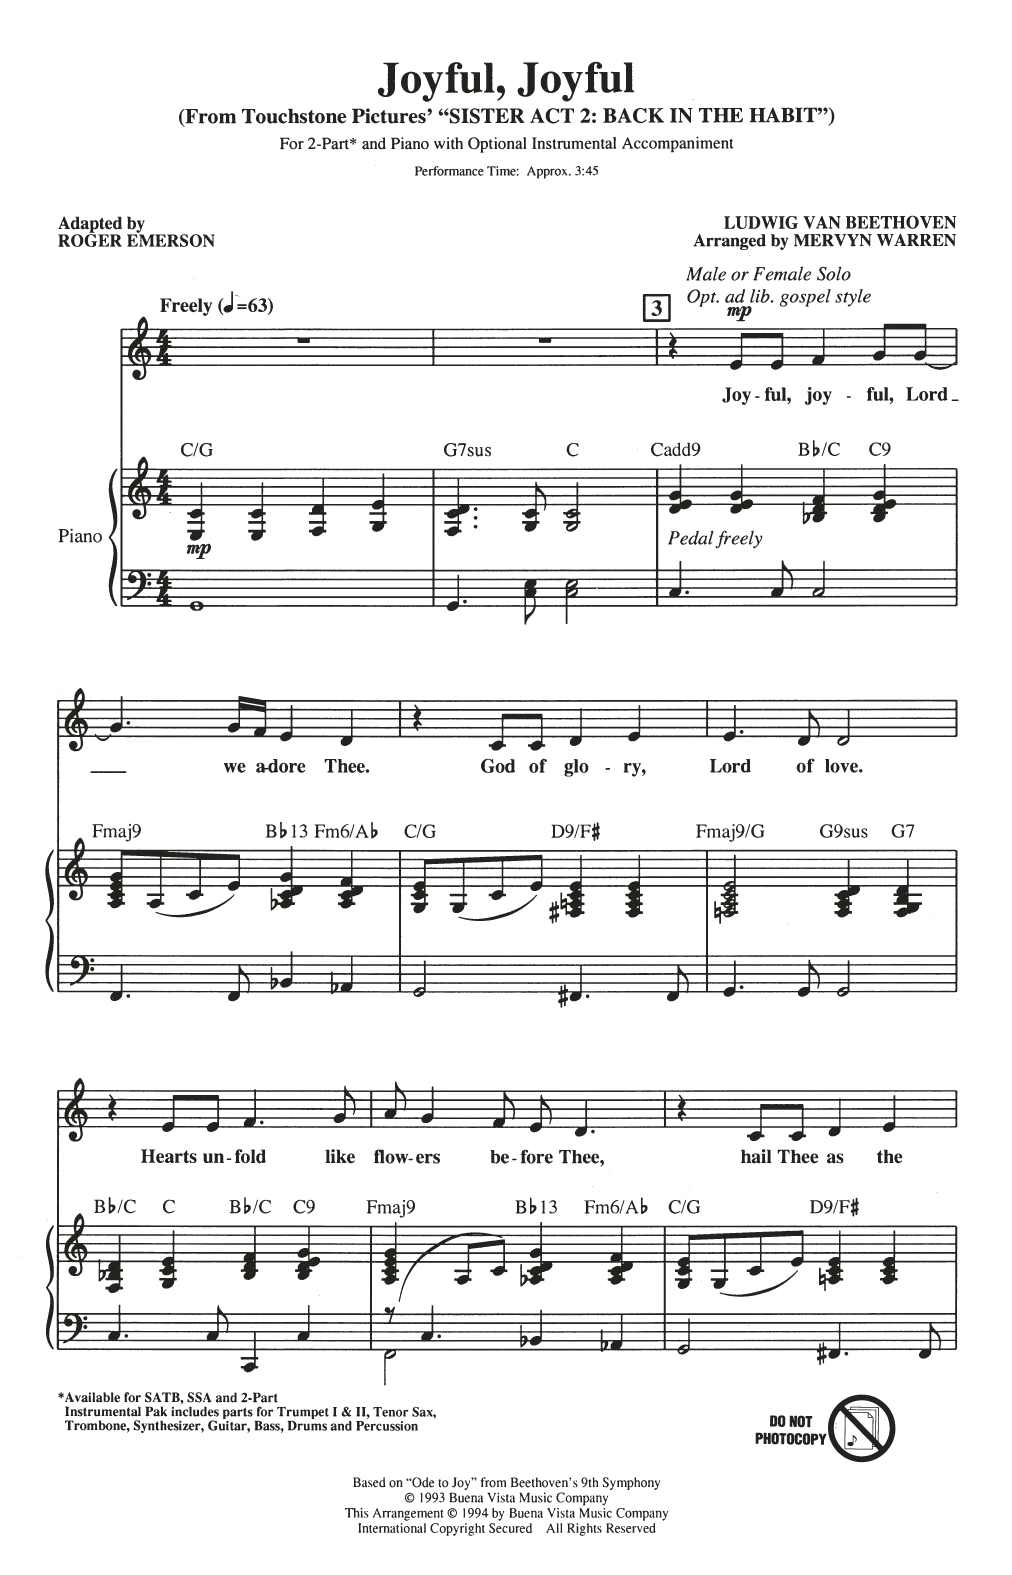 Download Mervyn Warren Joyful, Joyful (from Sister Act 2) (arr. Roger Emerson) Sheet Music and learn how to play SATB Choir PDF digital score in minutes